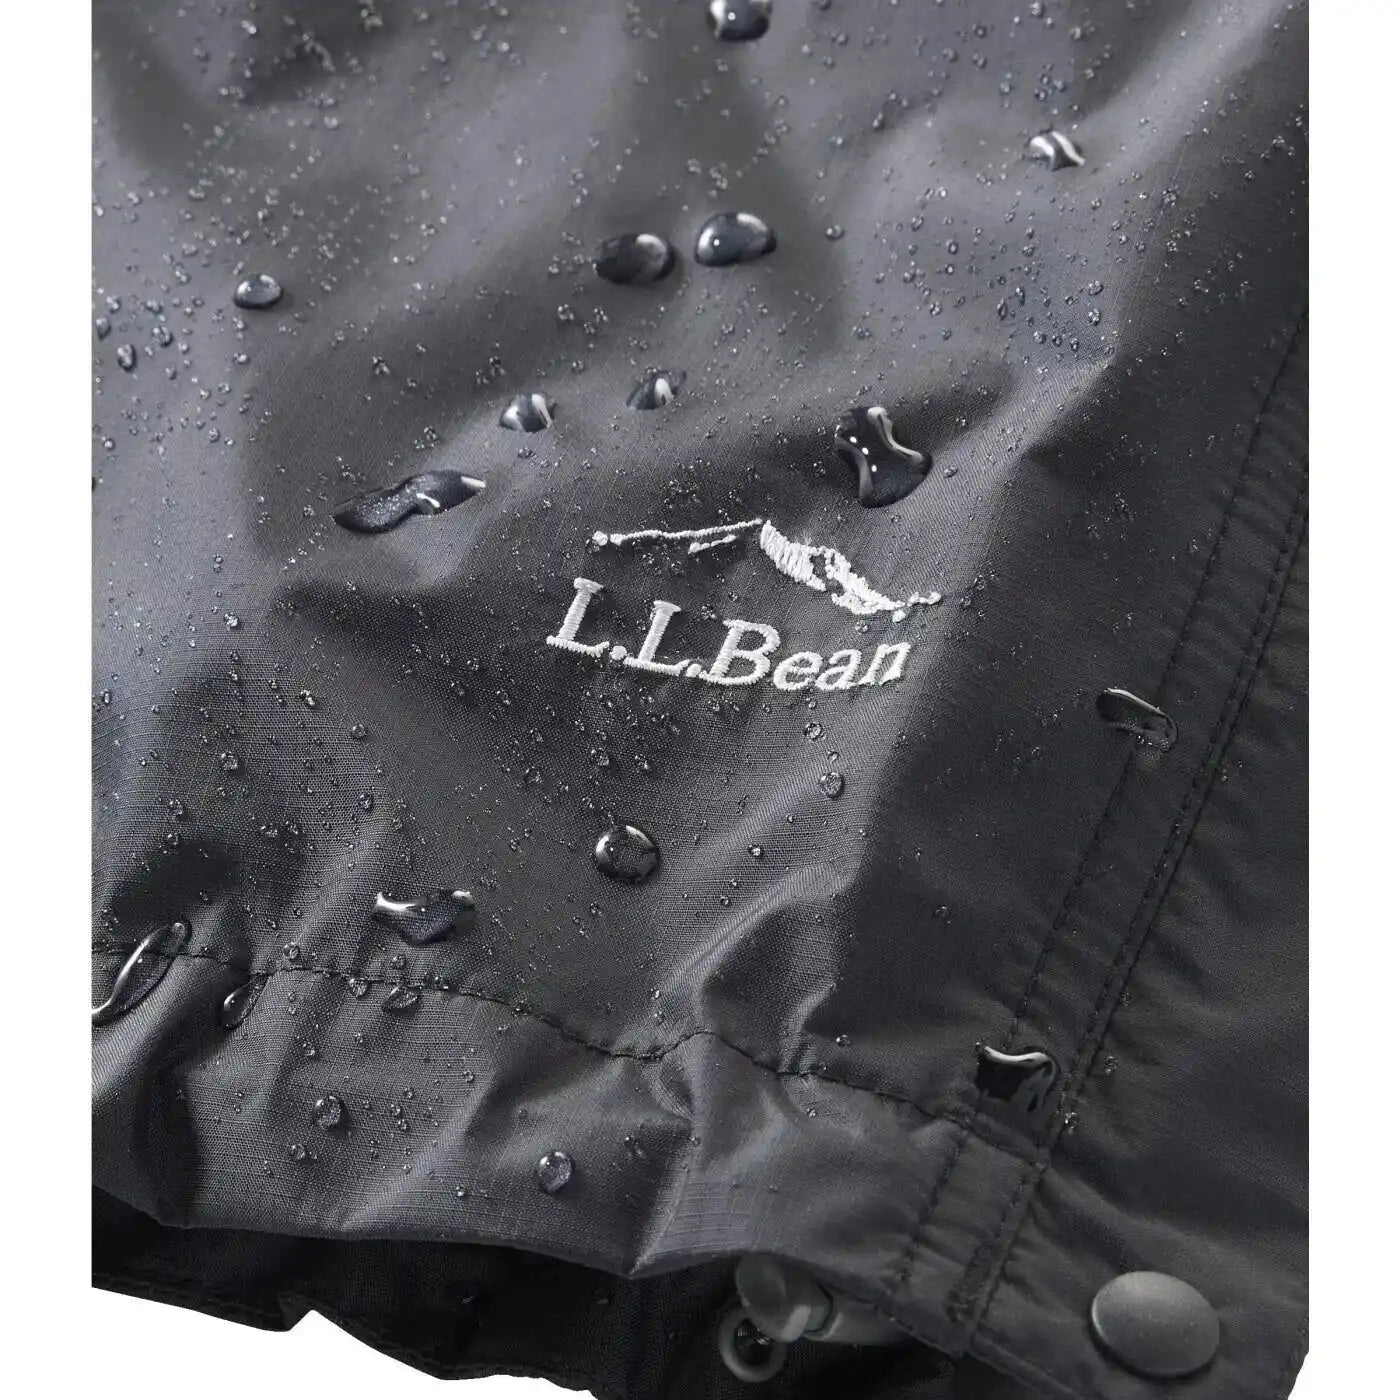 L.L. Bean M's Trail Model Rain Pants, Black, view of water on pants